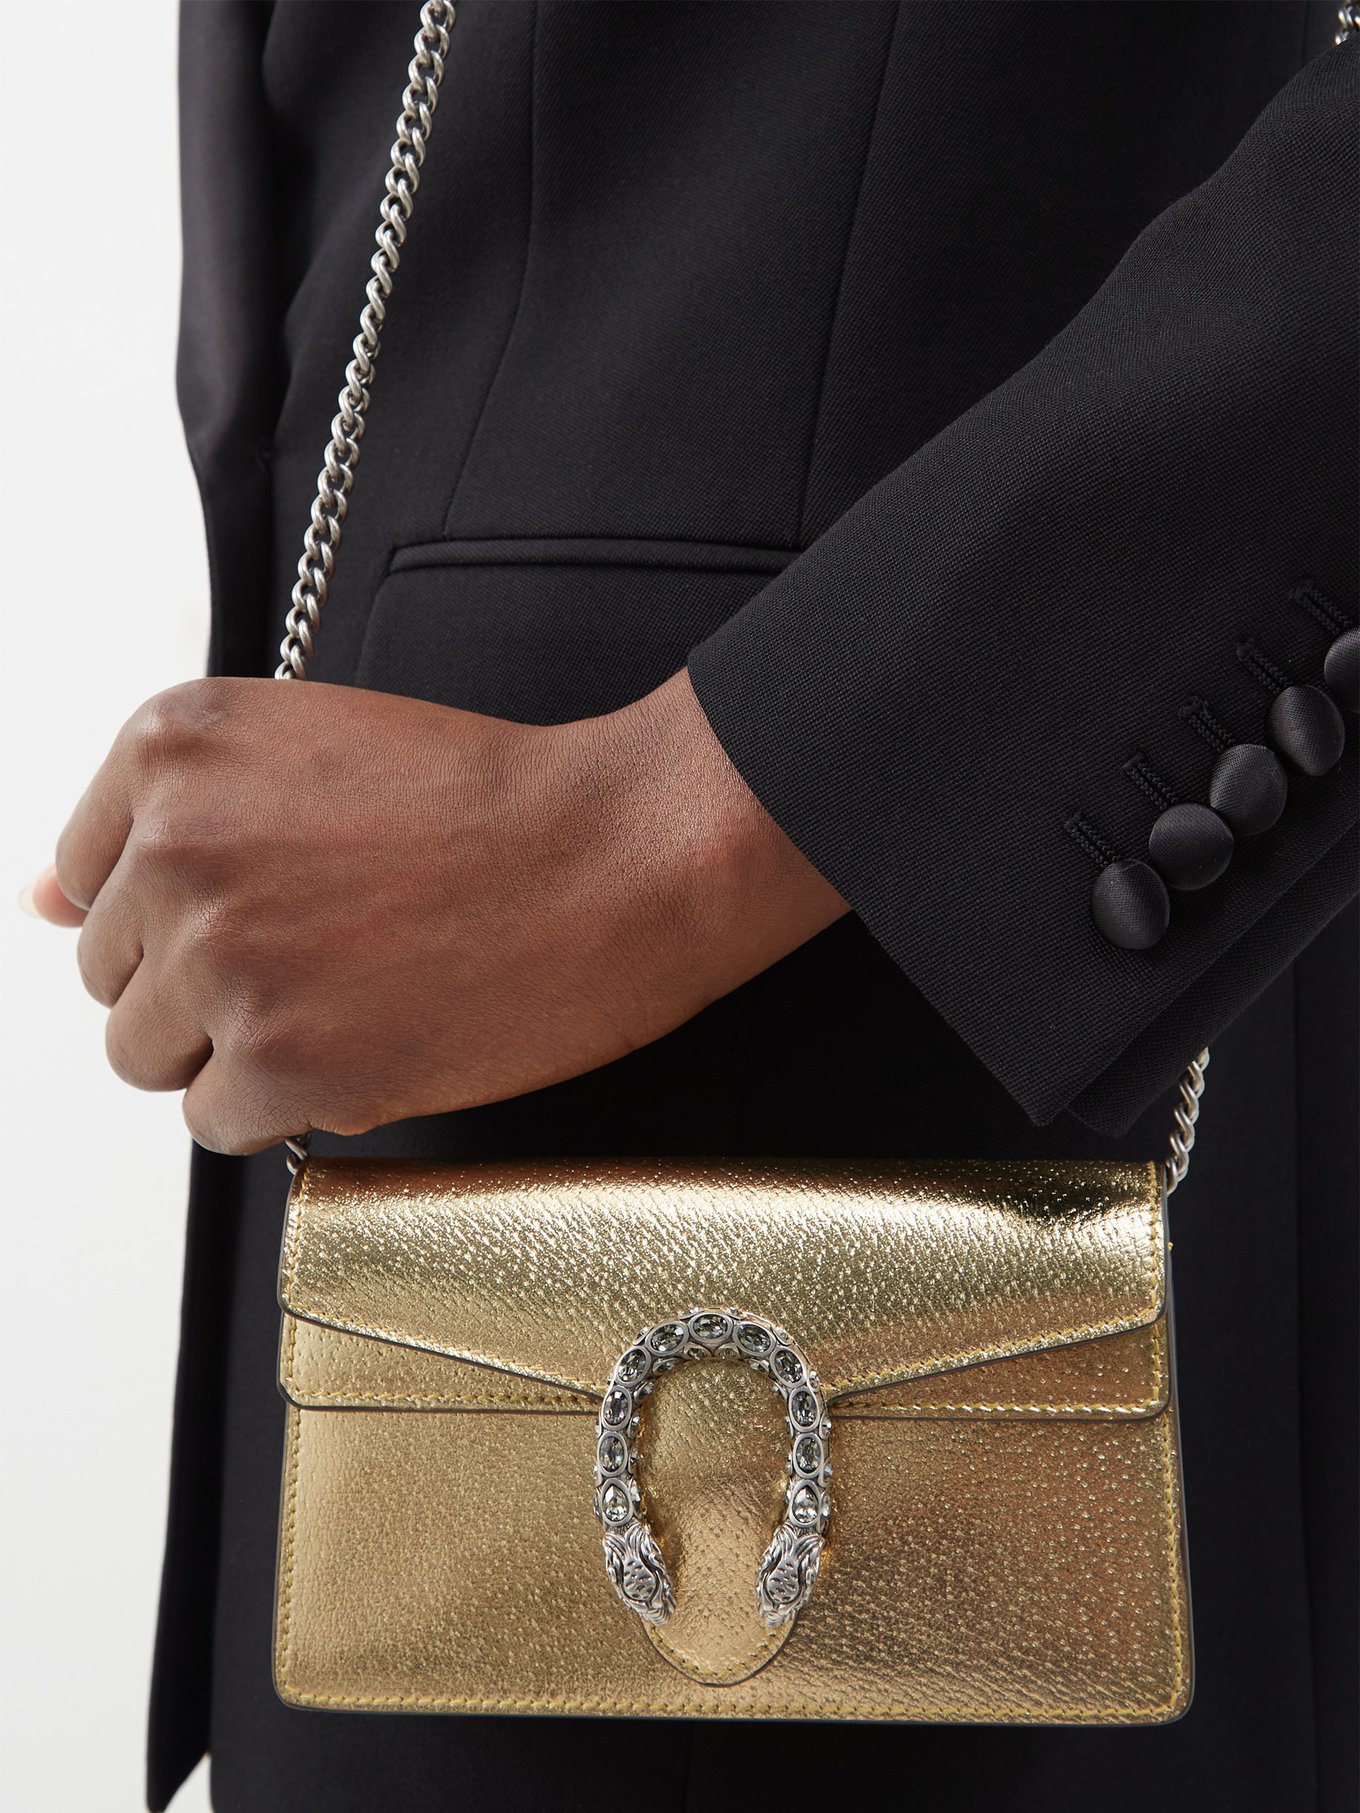 Gold Dionysus super mini leather cross-body bag